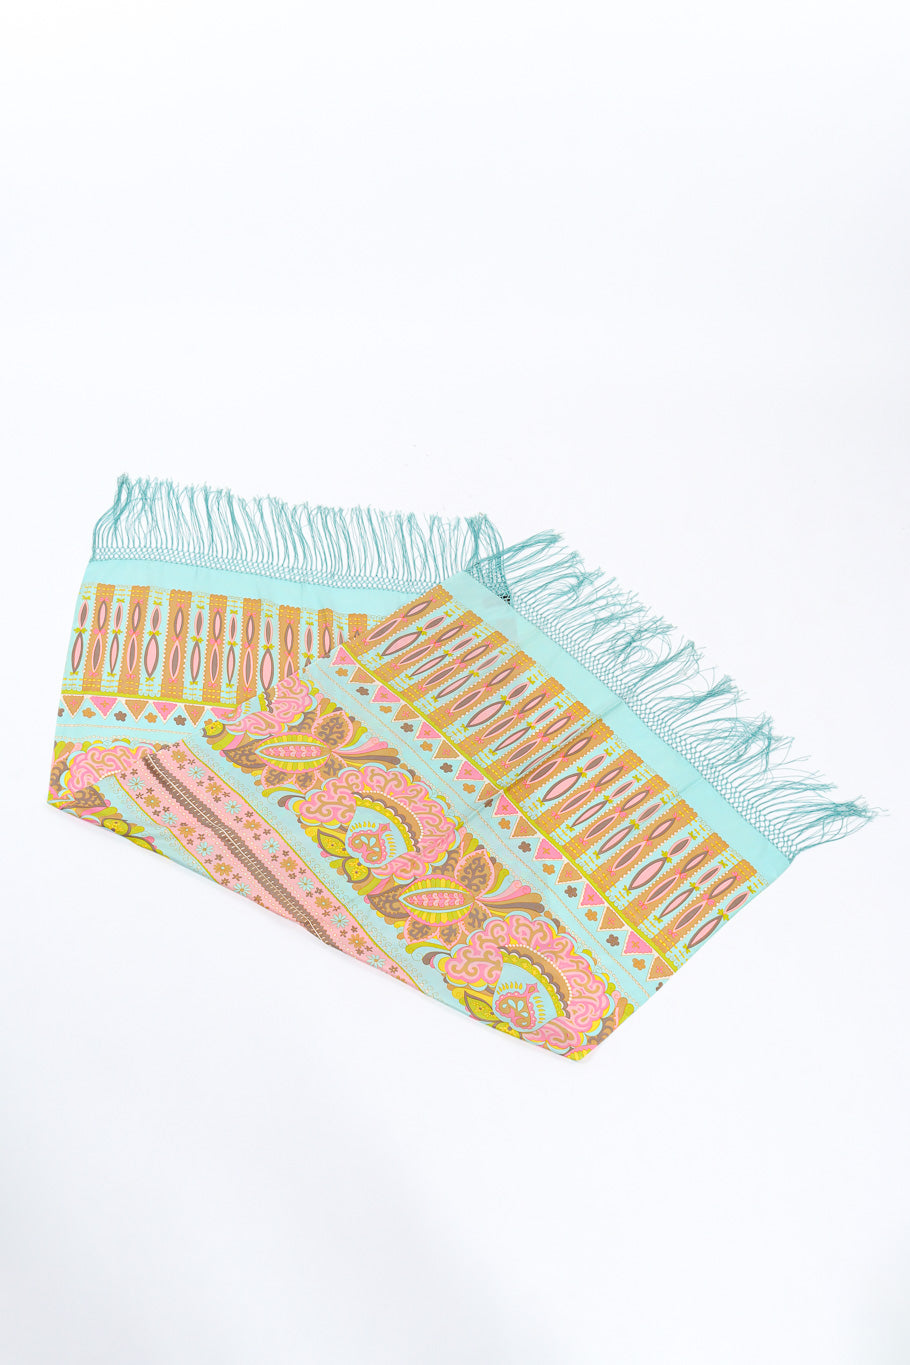 Creazione Serica Lariana bright floral fringe shawl flat-lay shot @recessla